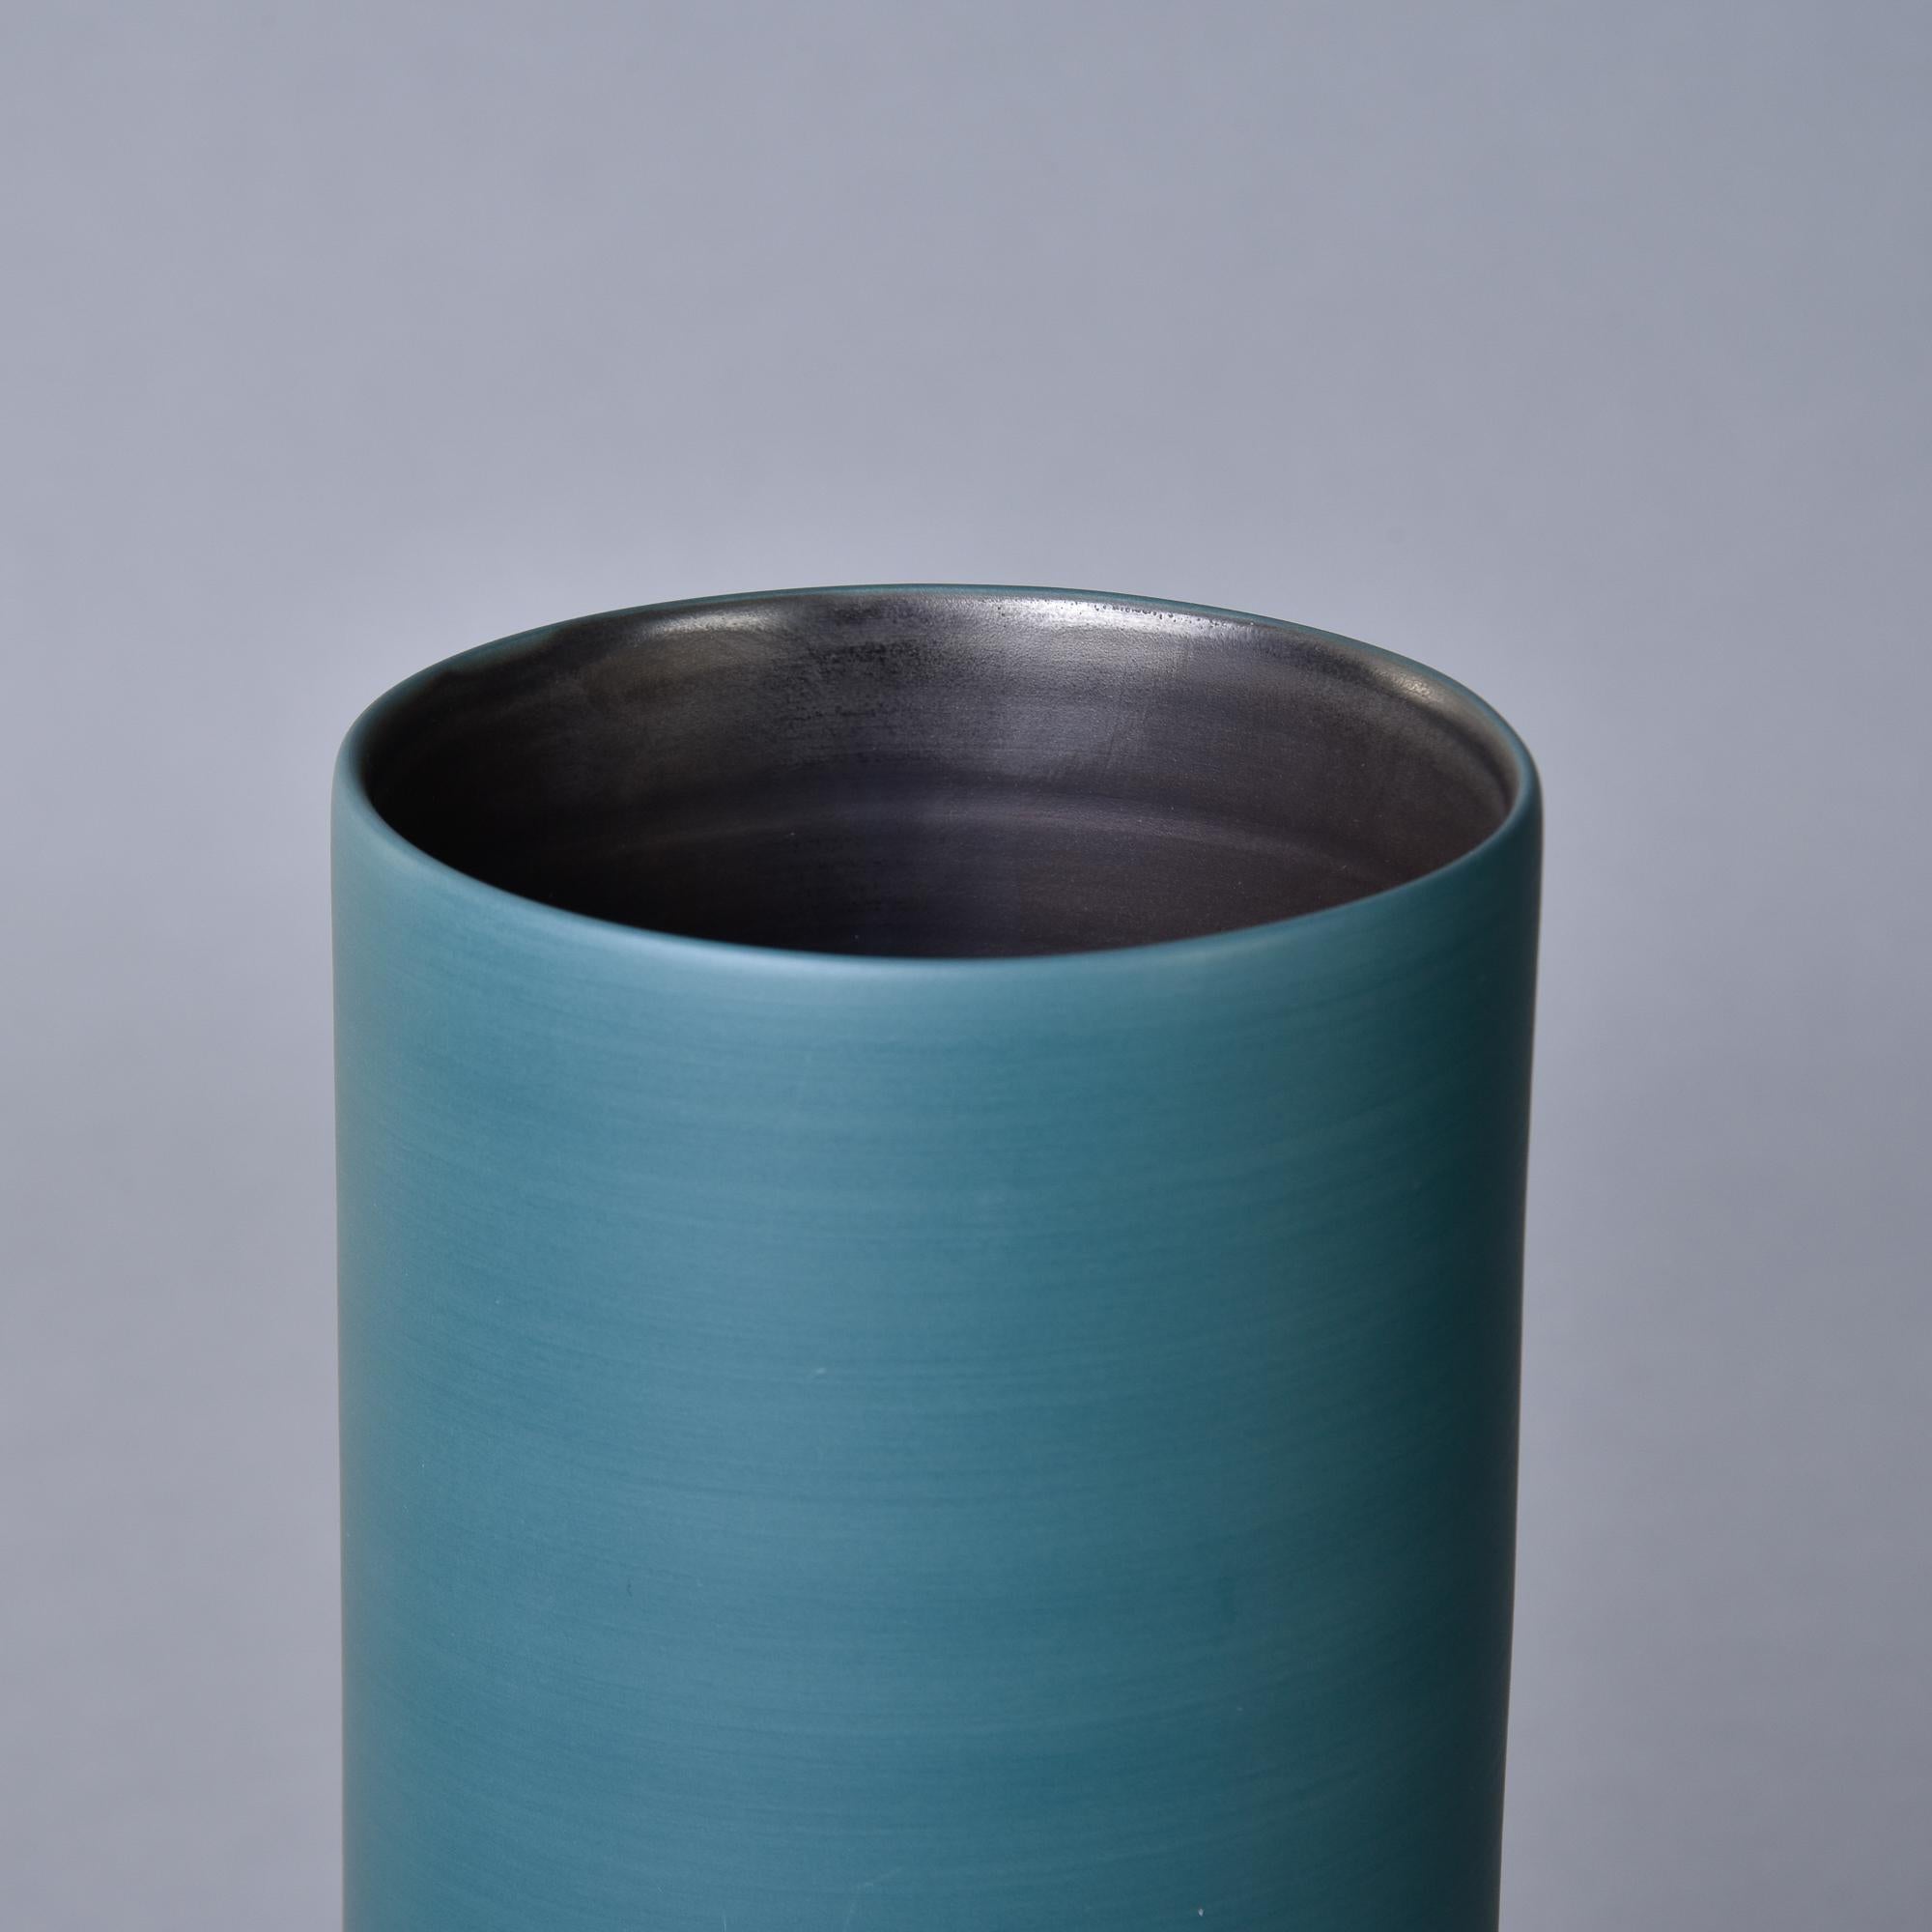 New Rina Menardi Canna 1 Vase in Mint For Sale 1